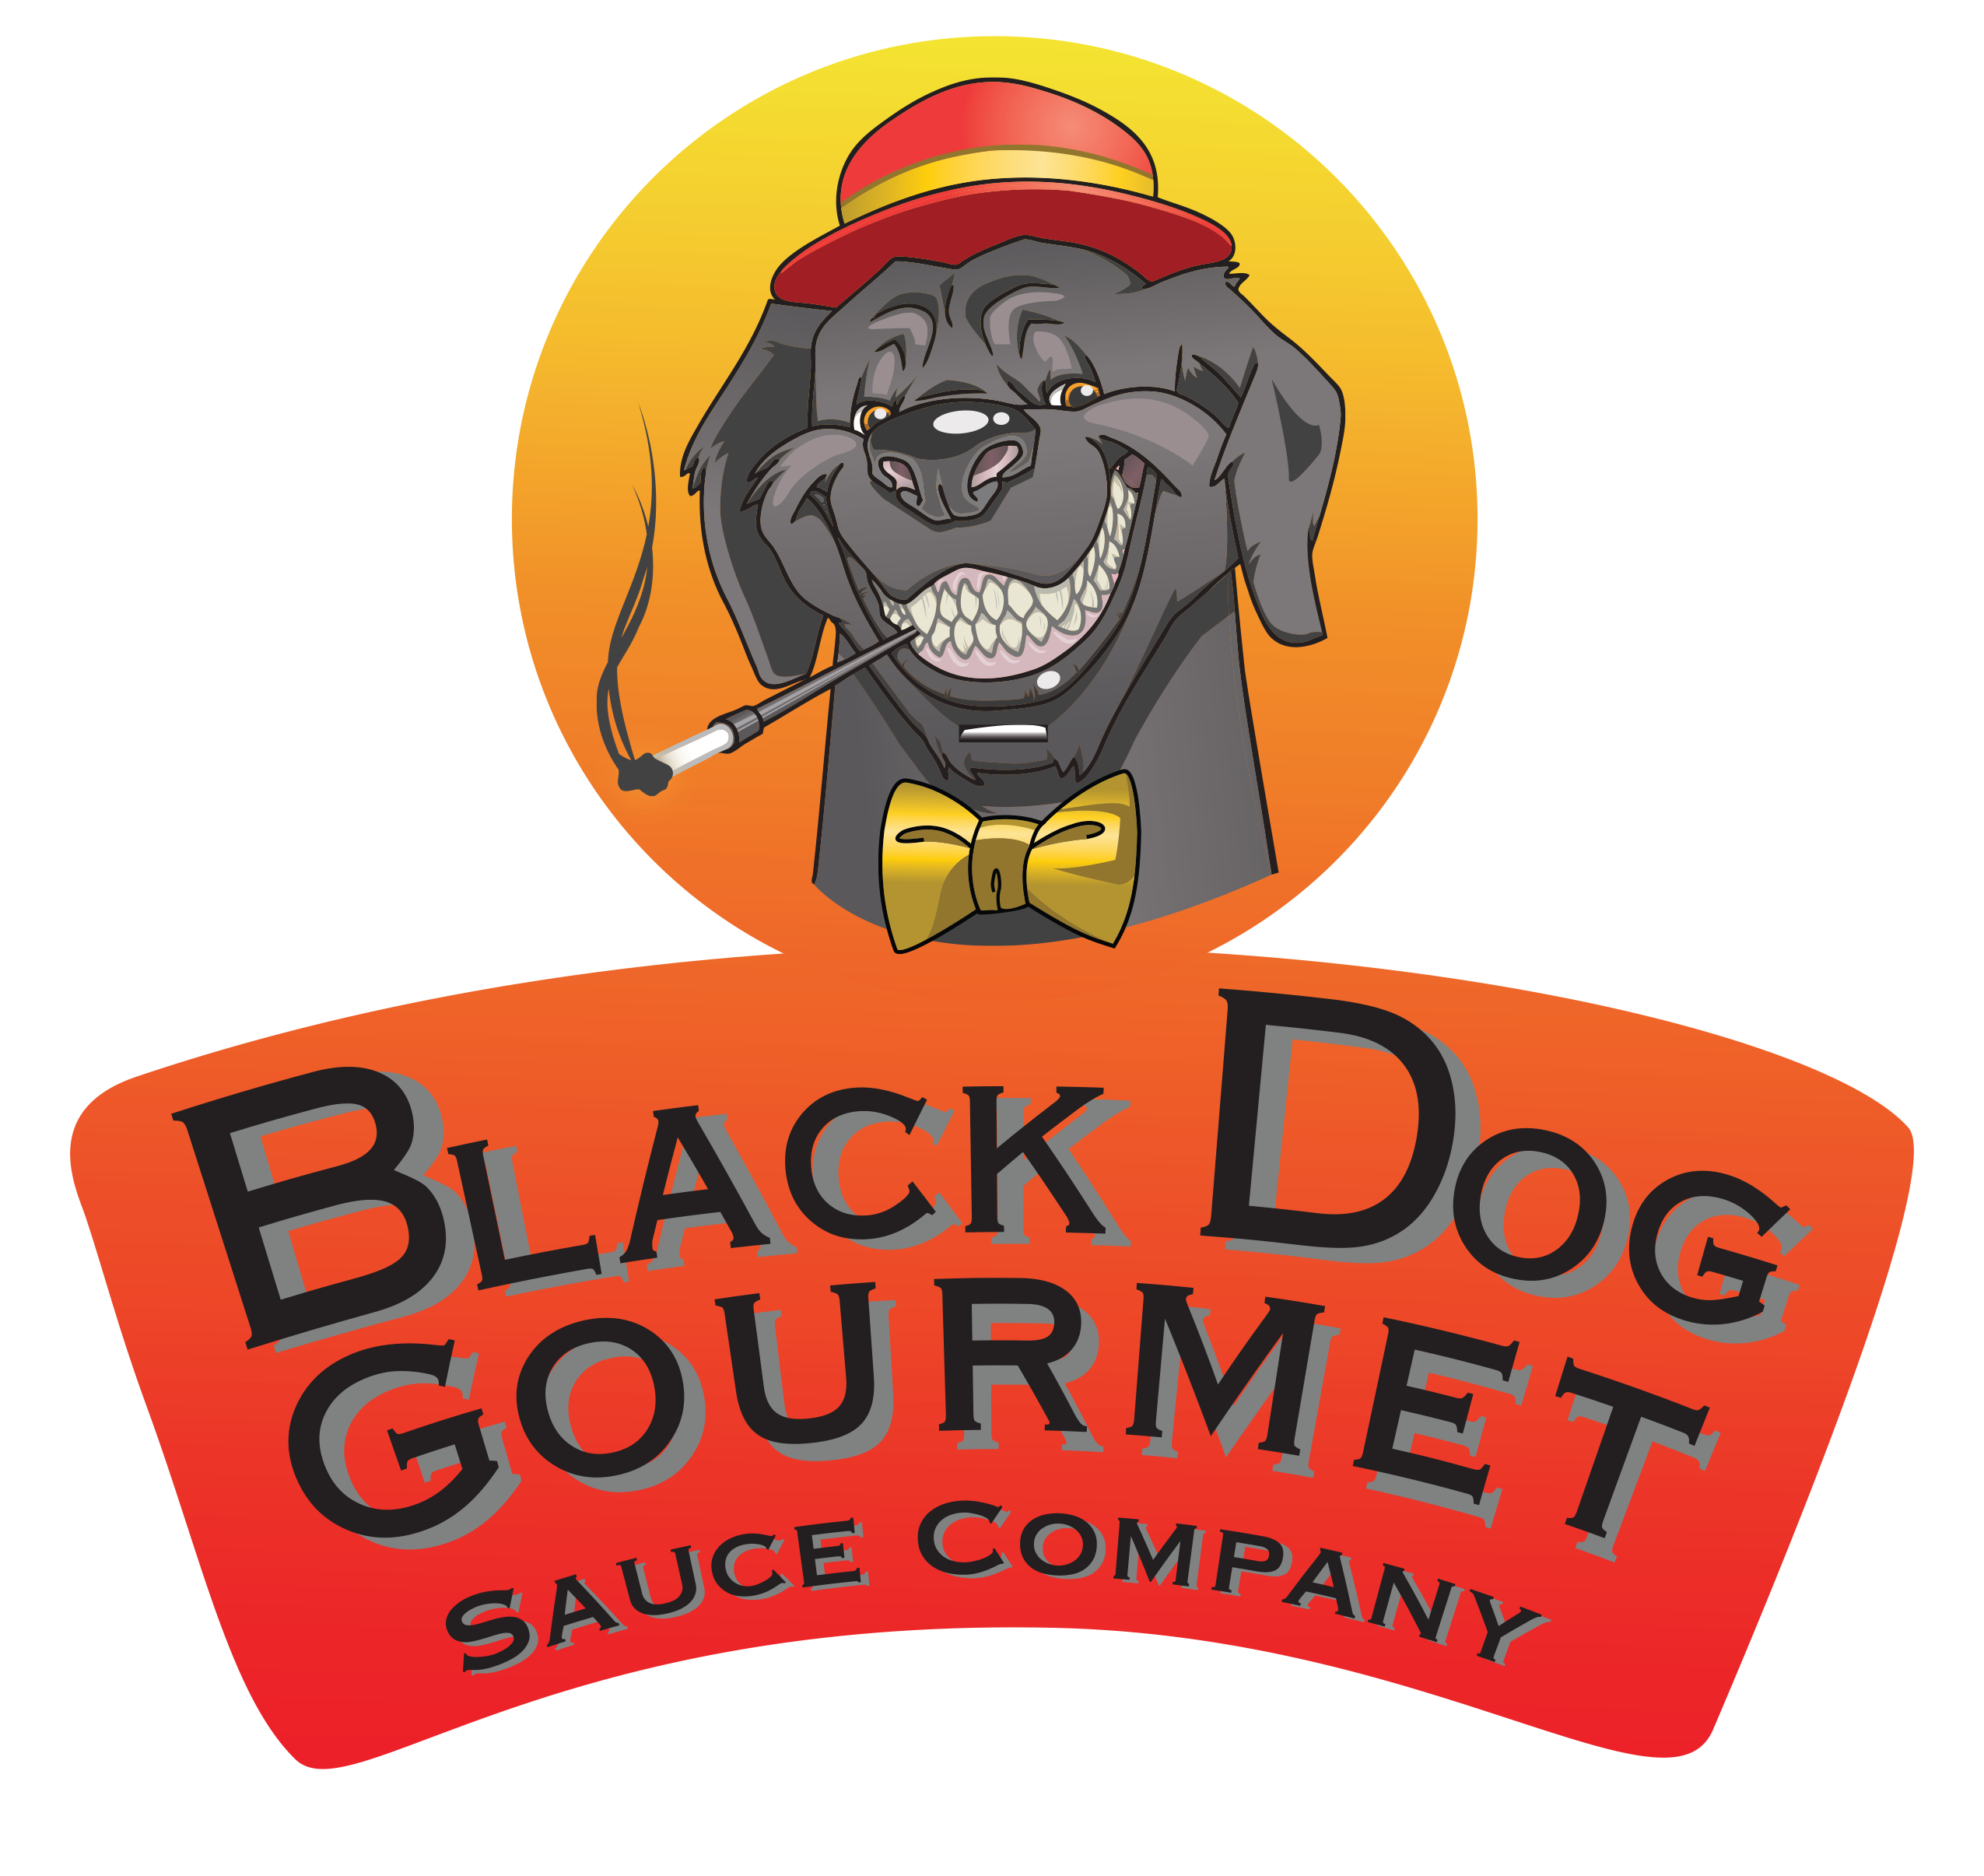 Black Dog Restaurant